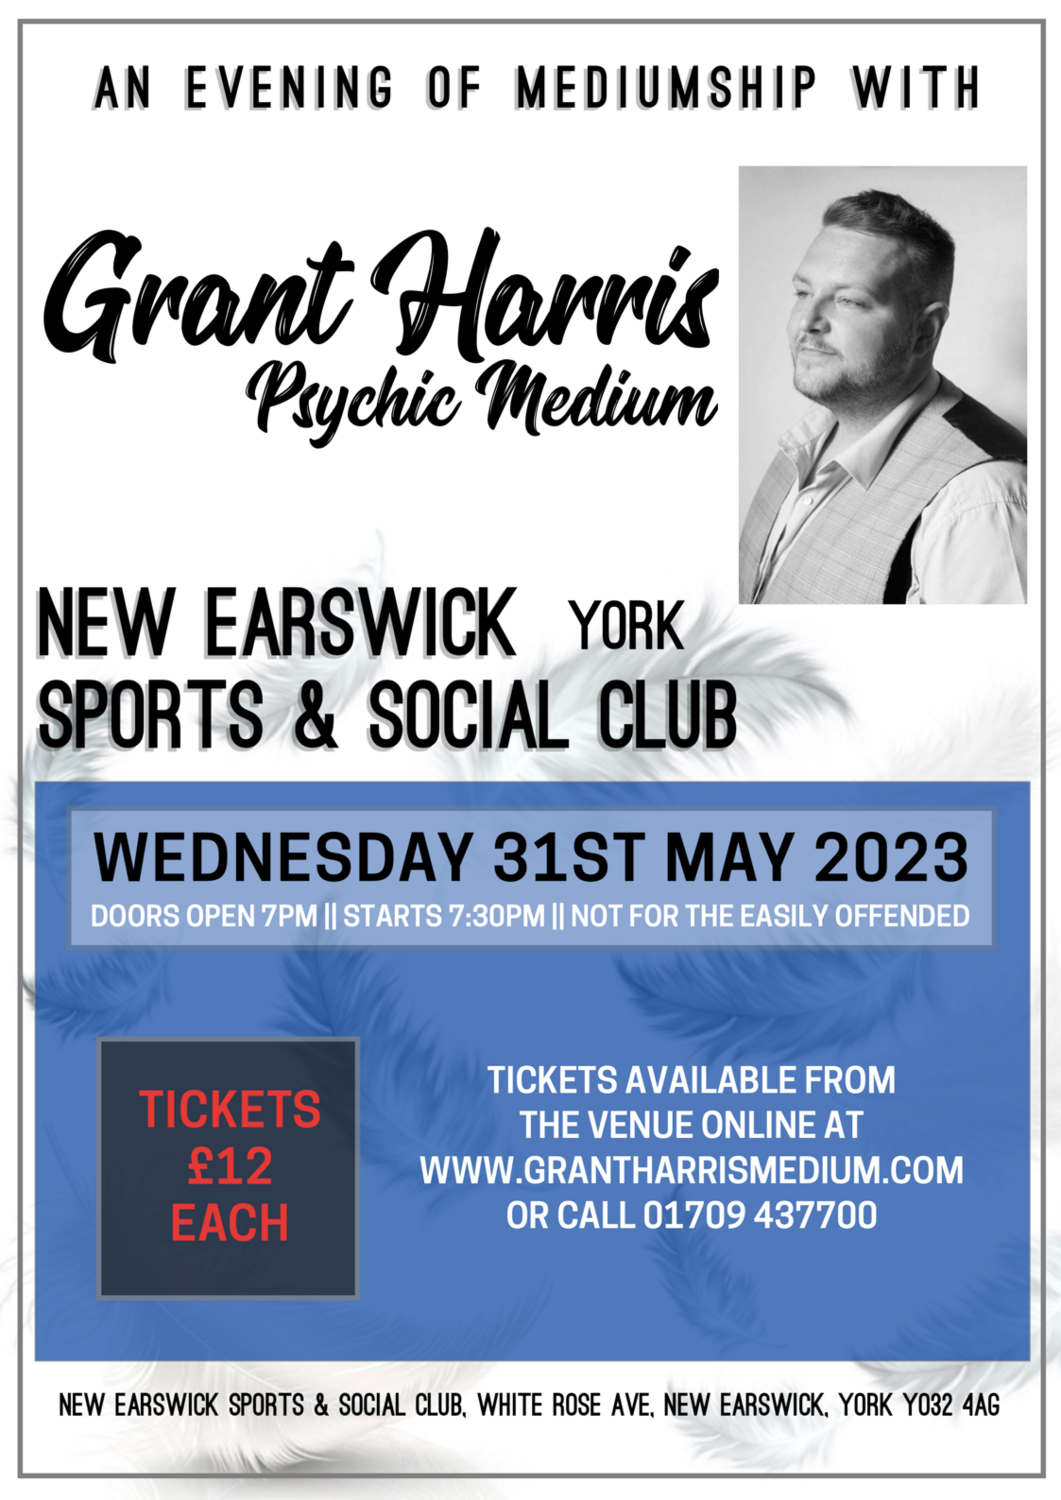 New Earswick Sports & Social Club, York, Wednesday 31th May 2023